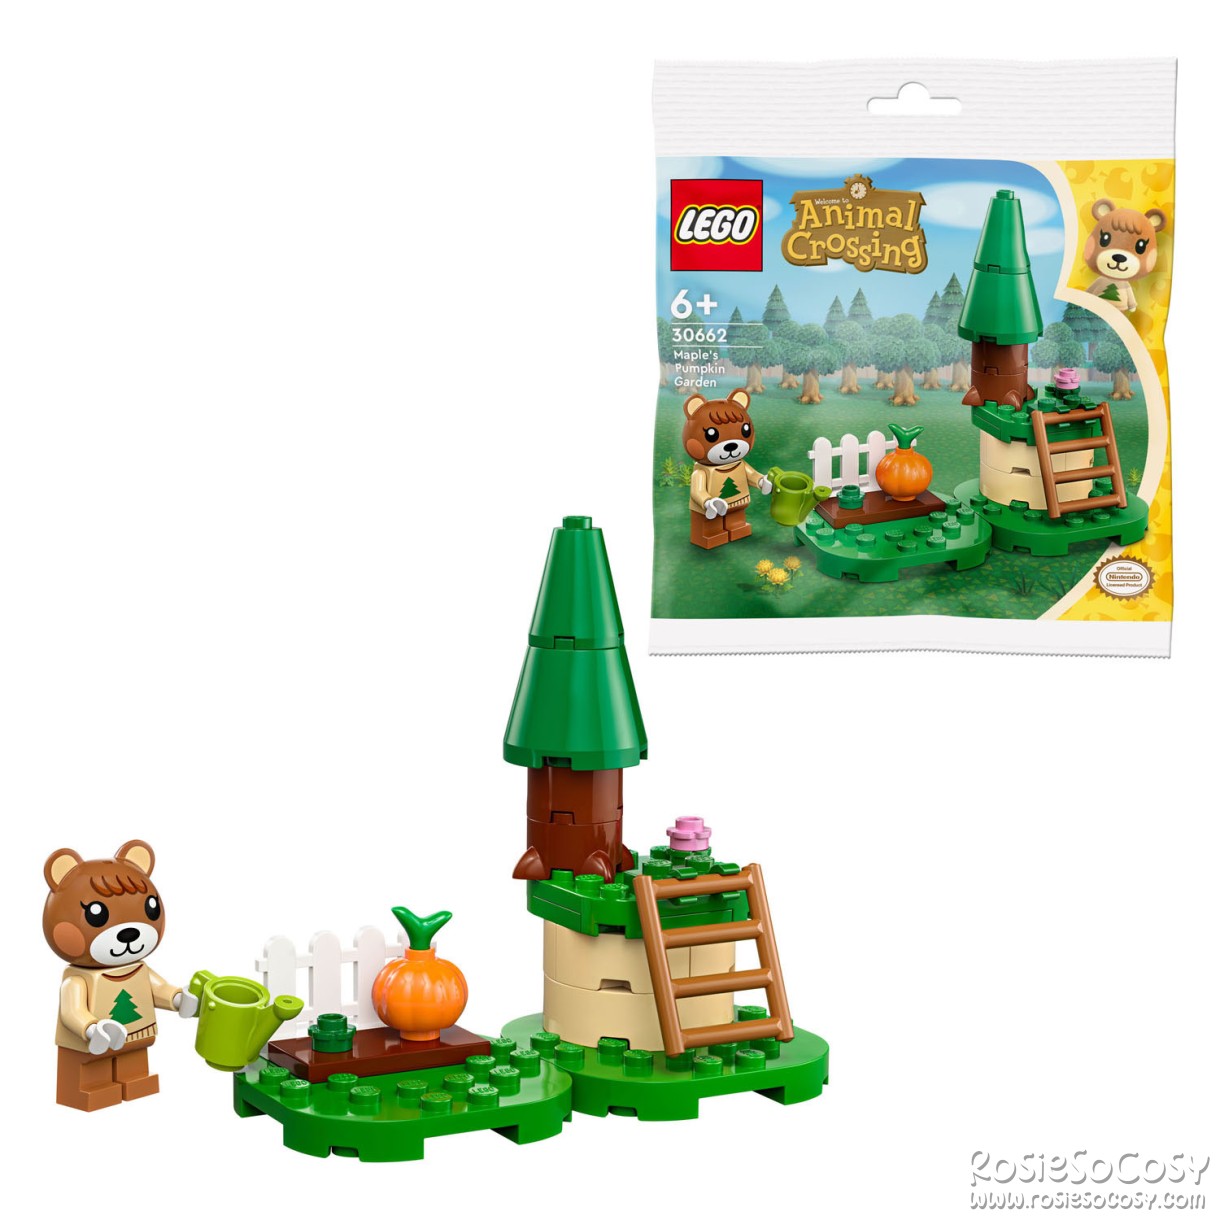 Animal Crossing LEGO 30662 Maple's Pumpkin Garden